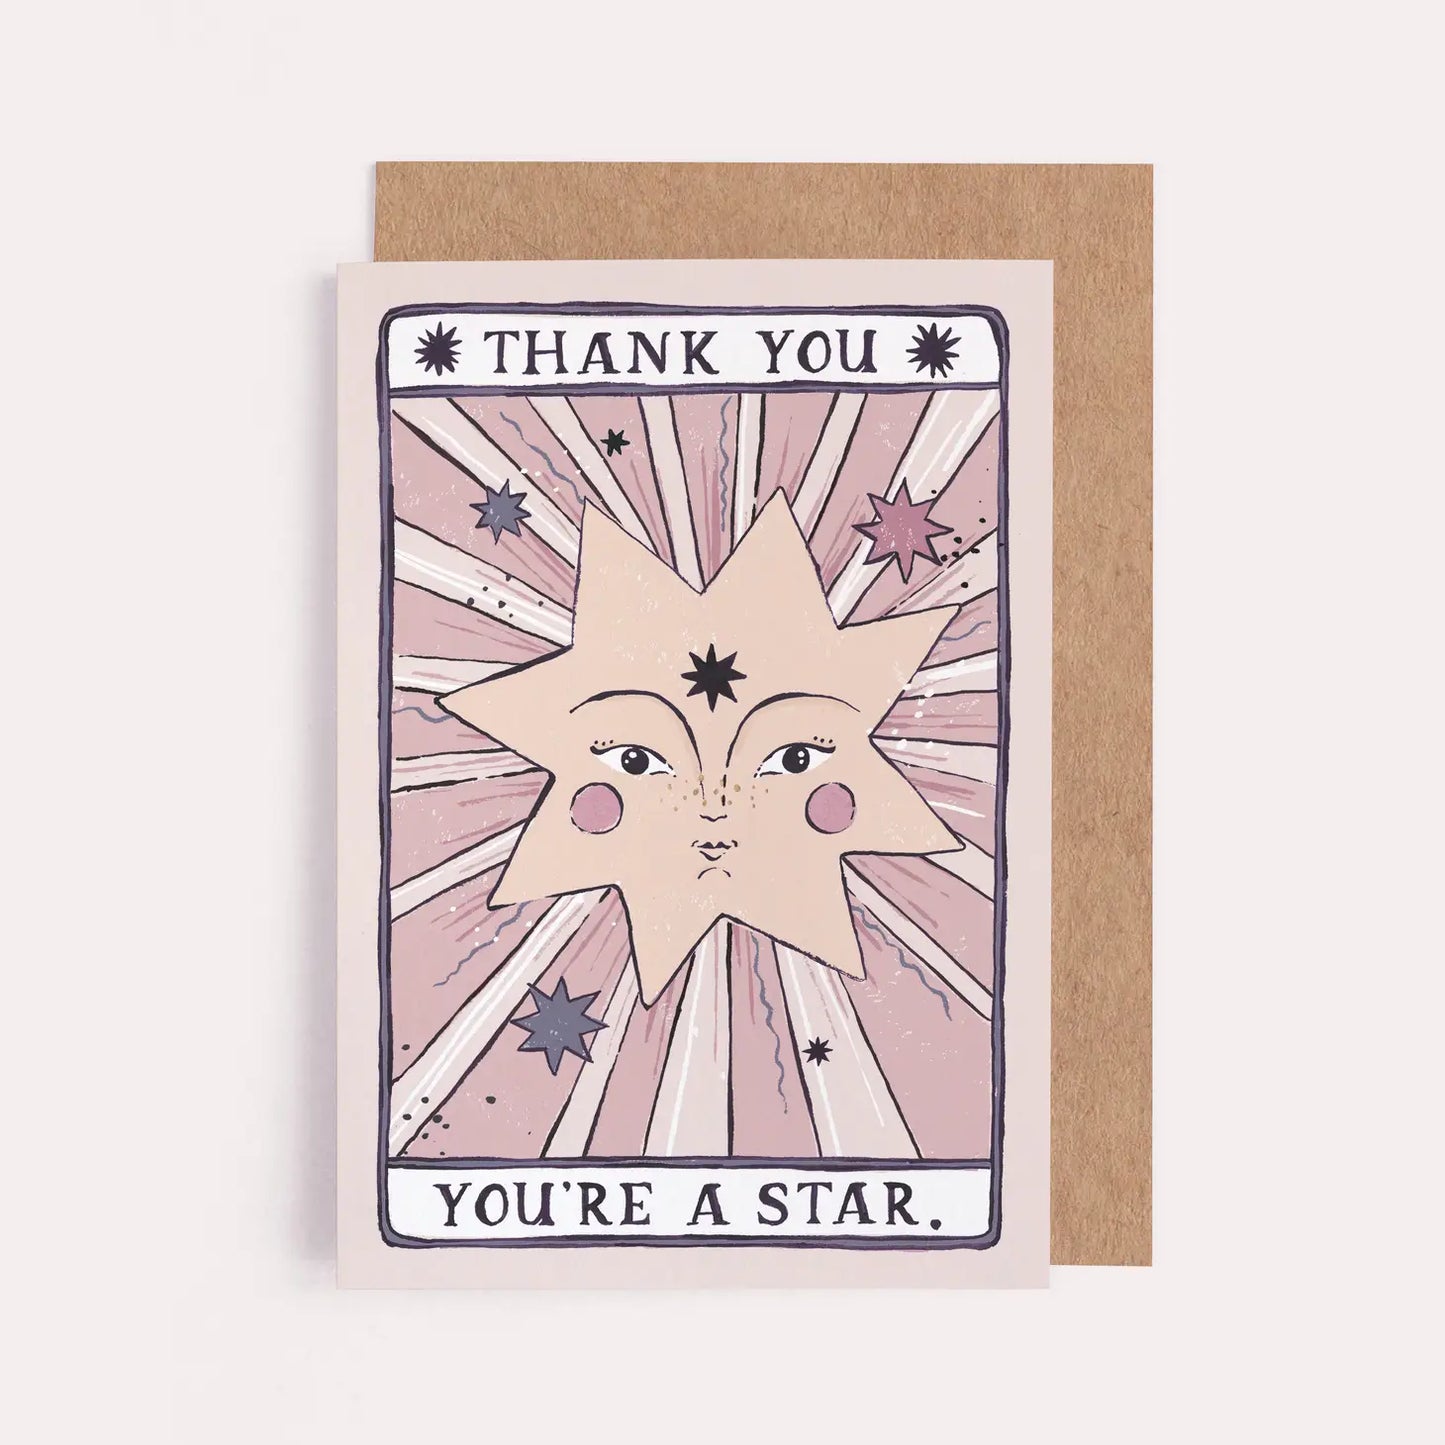 You’ve A Star Thank You Card - Tarot Card